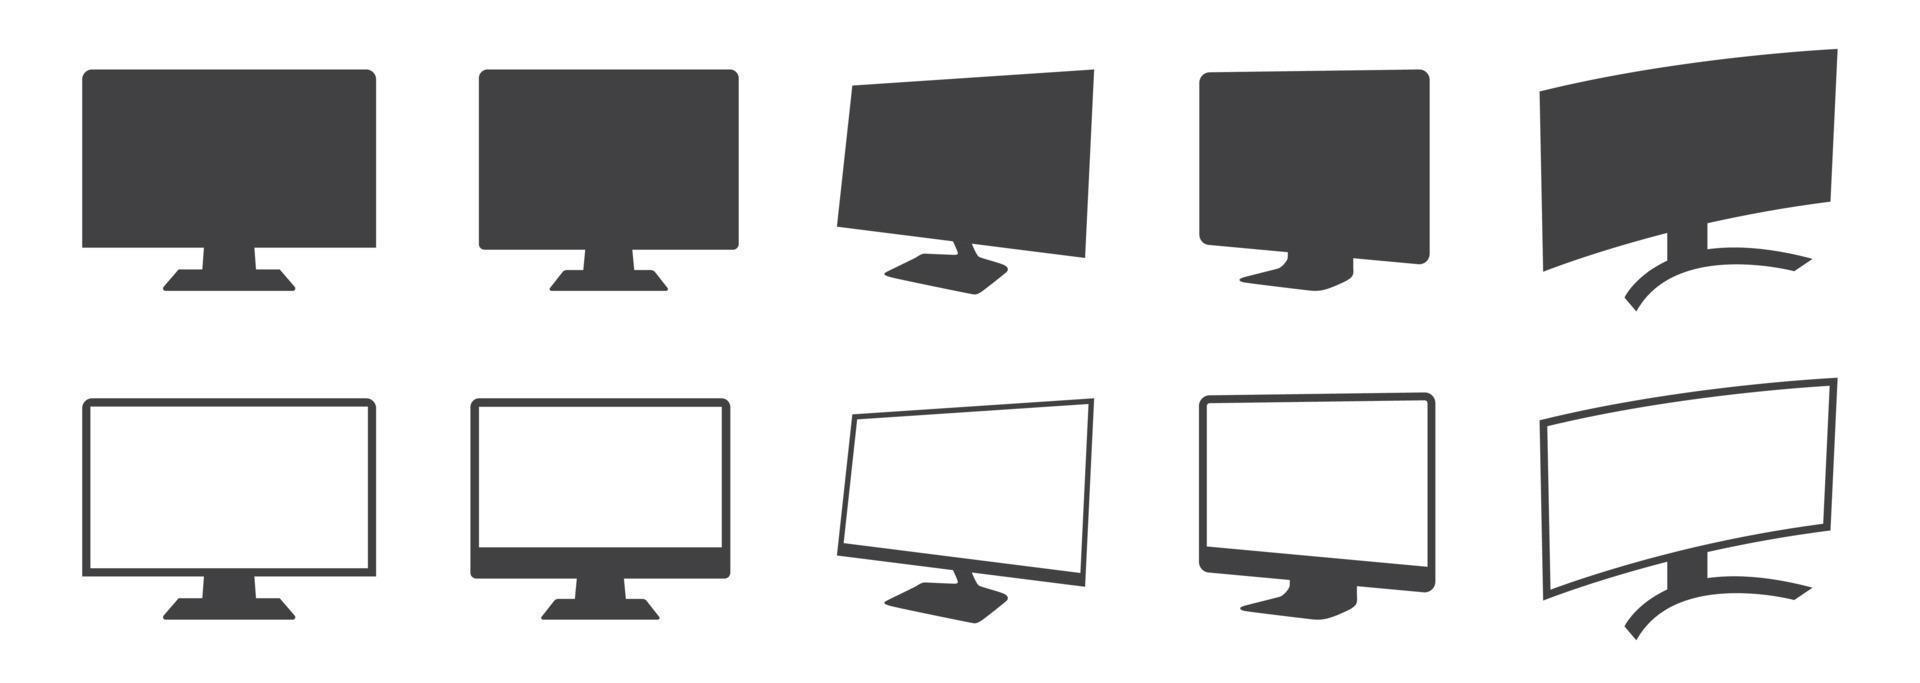 Device Icon laptop, desktop computer, monitor, and tv. Vector illustration, flat design